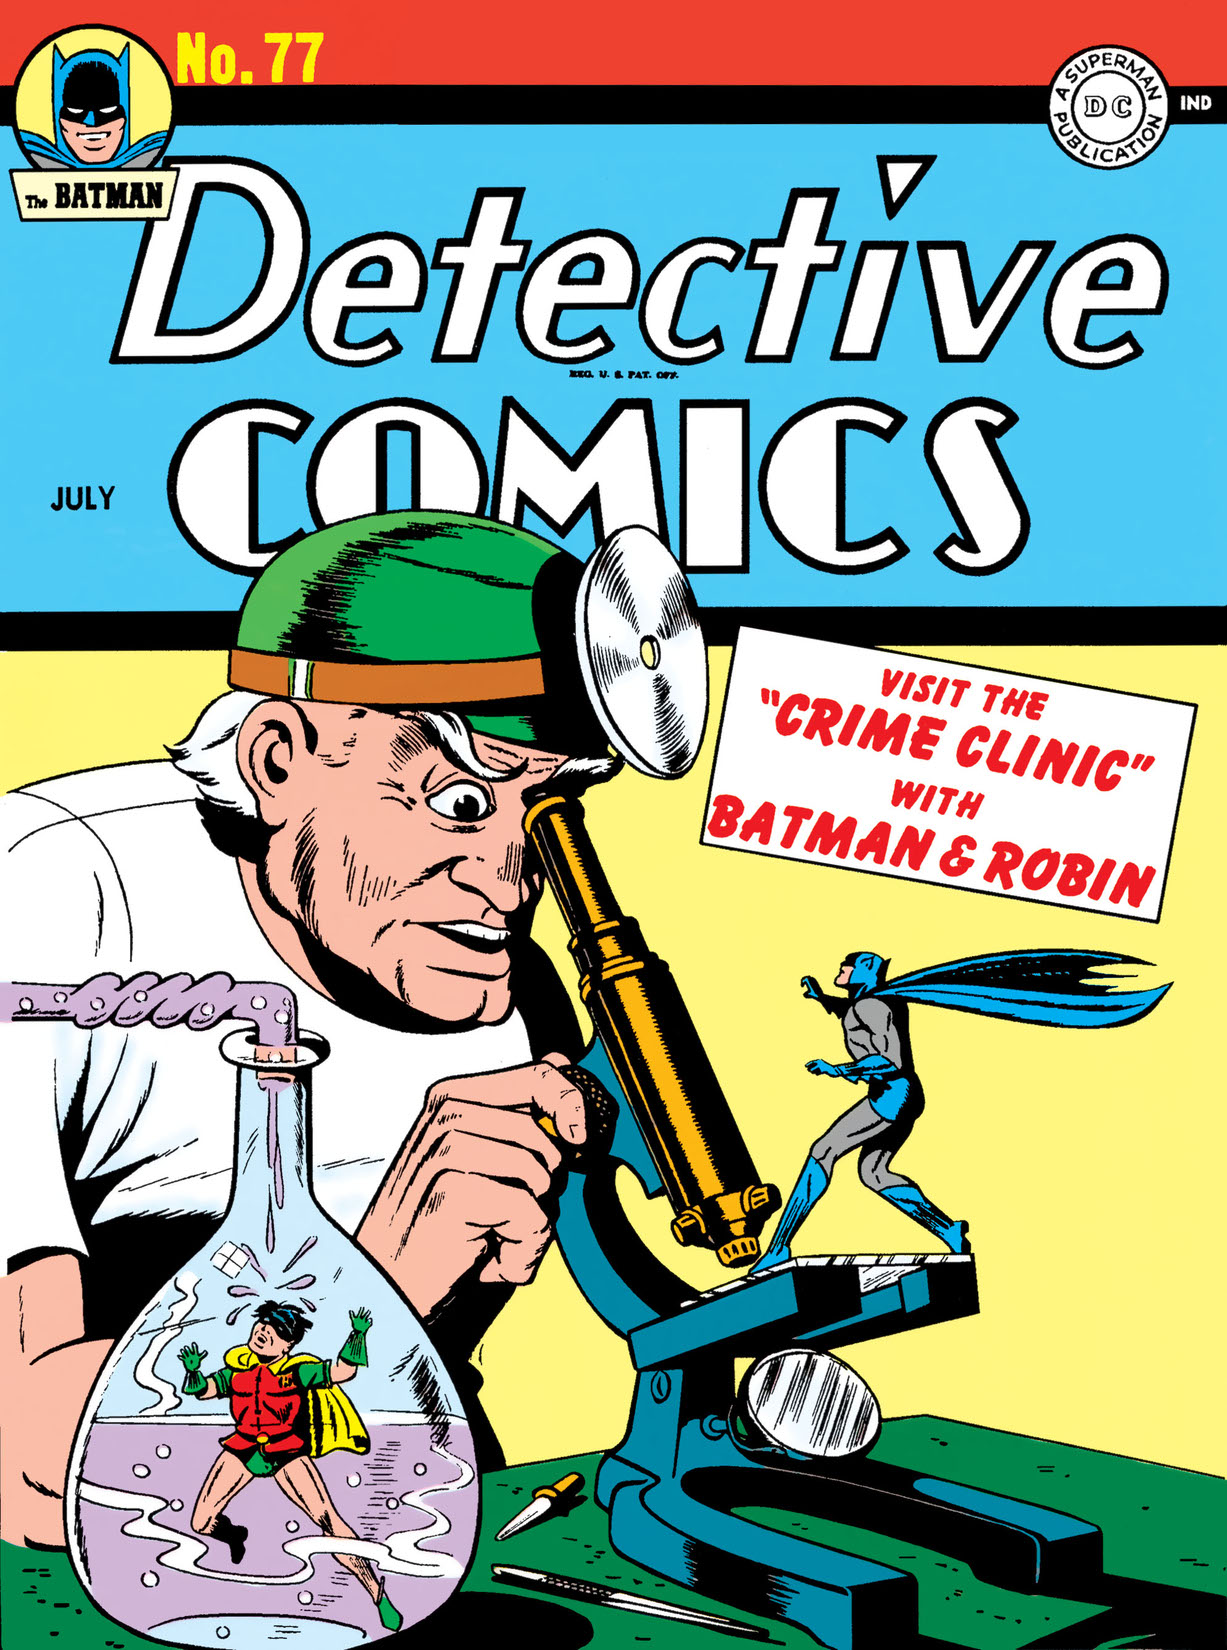 Detective Comics (1942-) #77 preview images